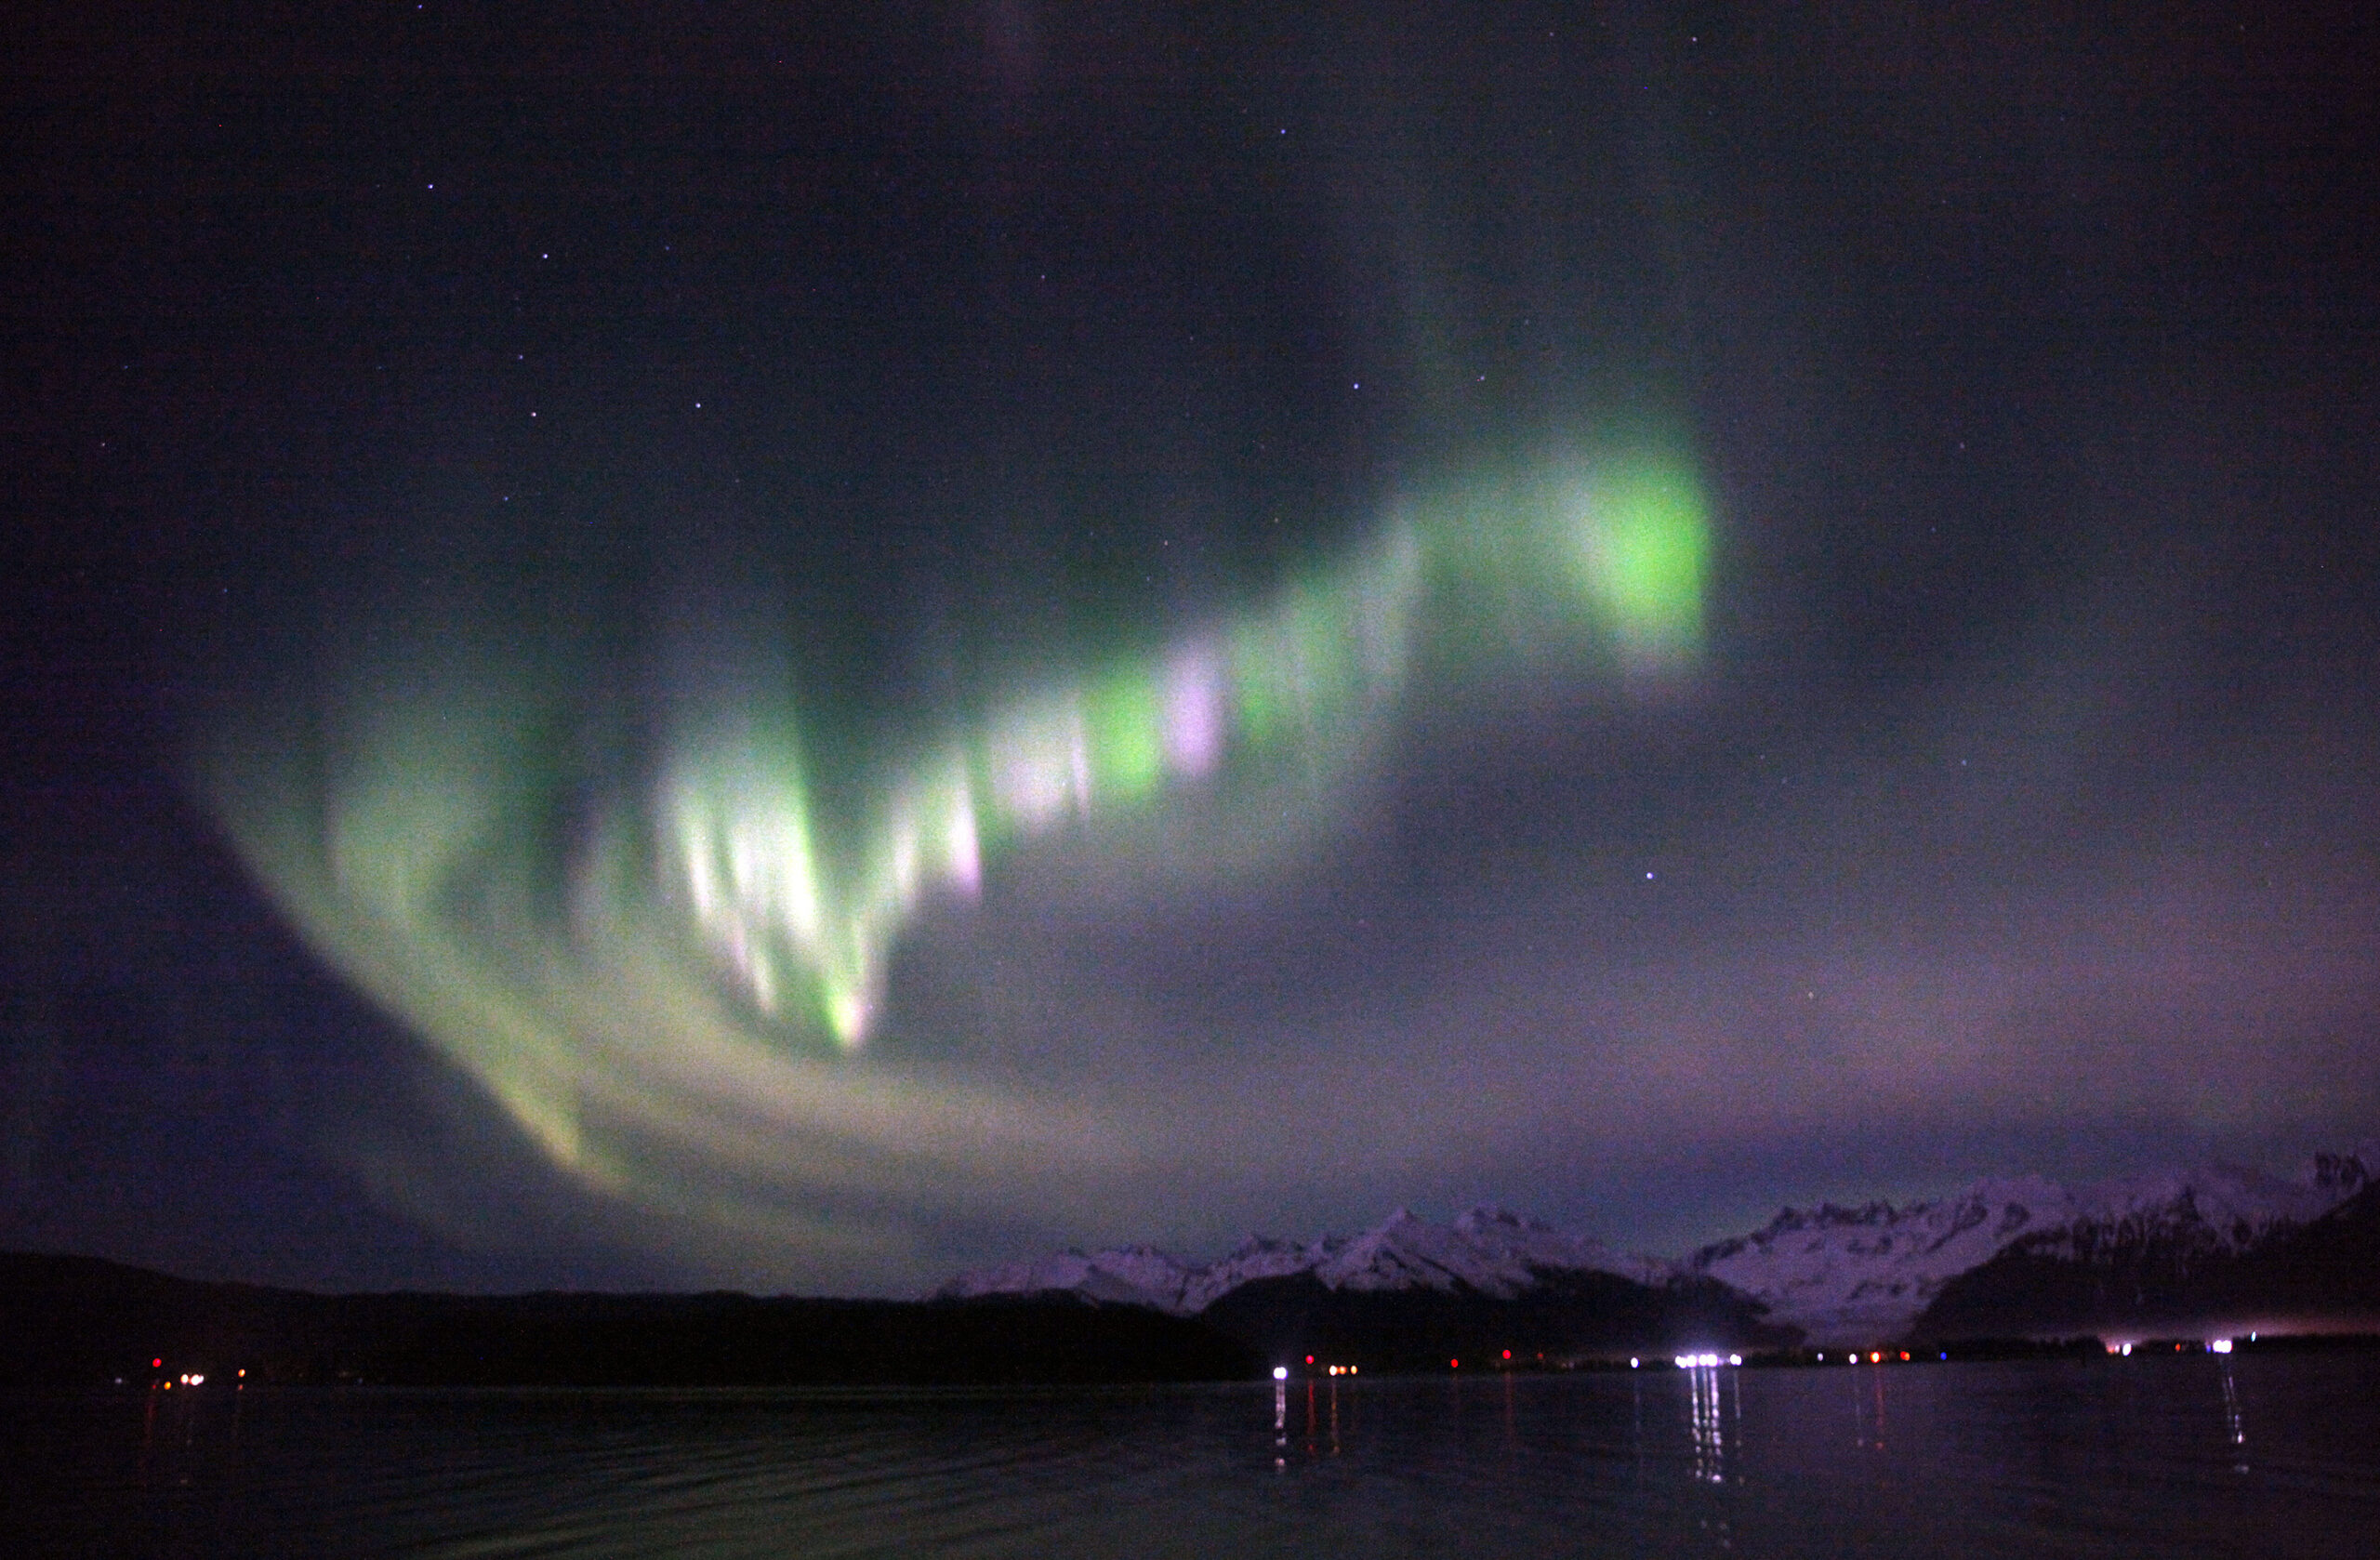 The night sky during aurora borealis in Alaska